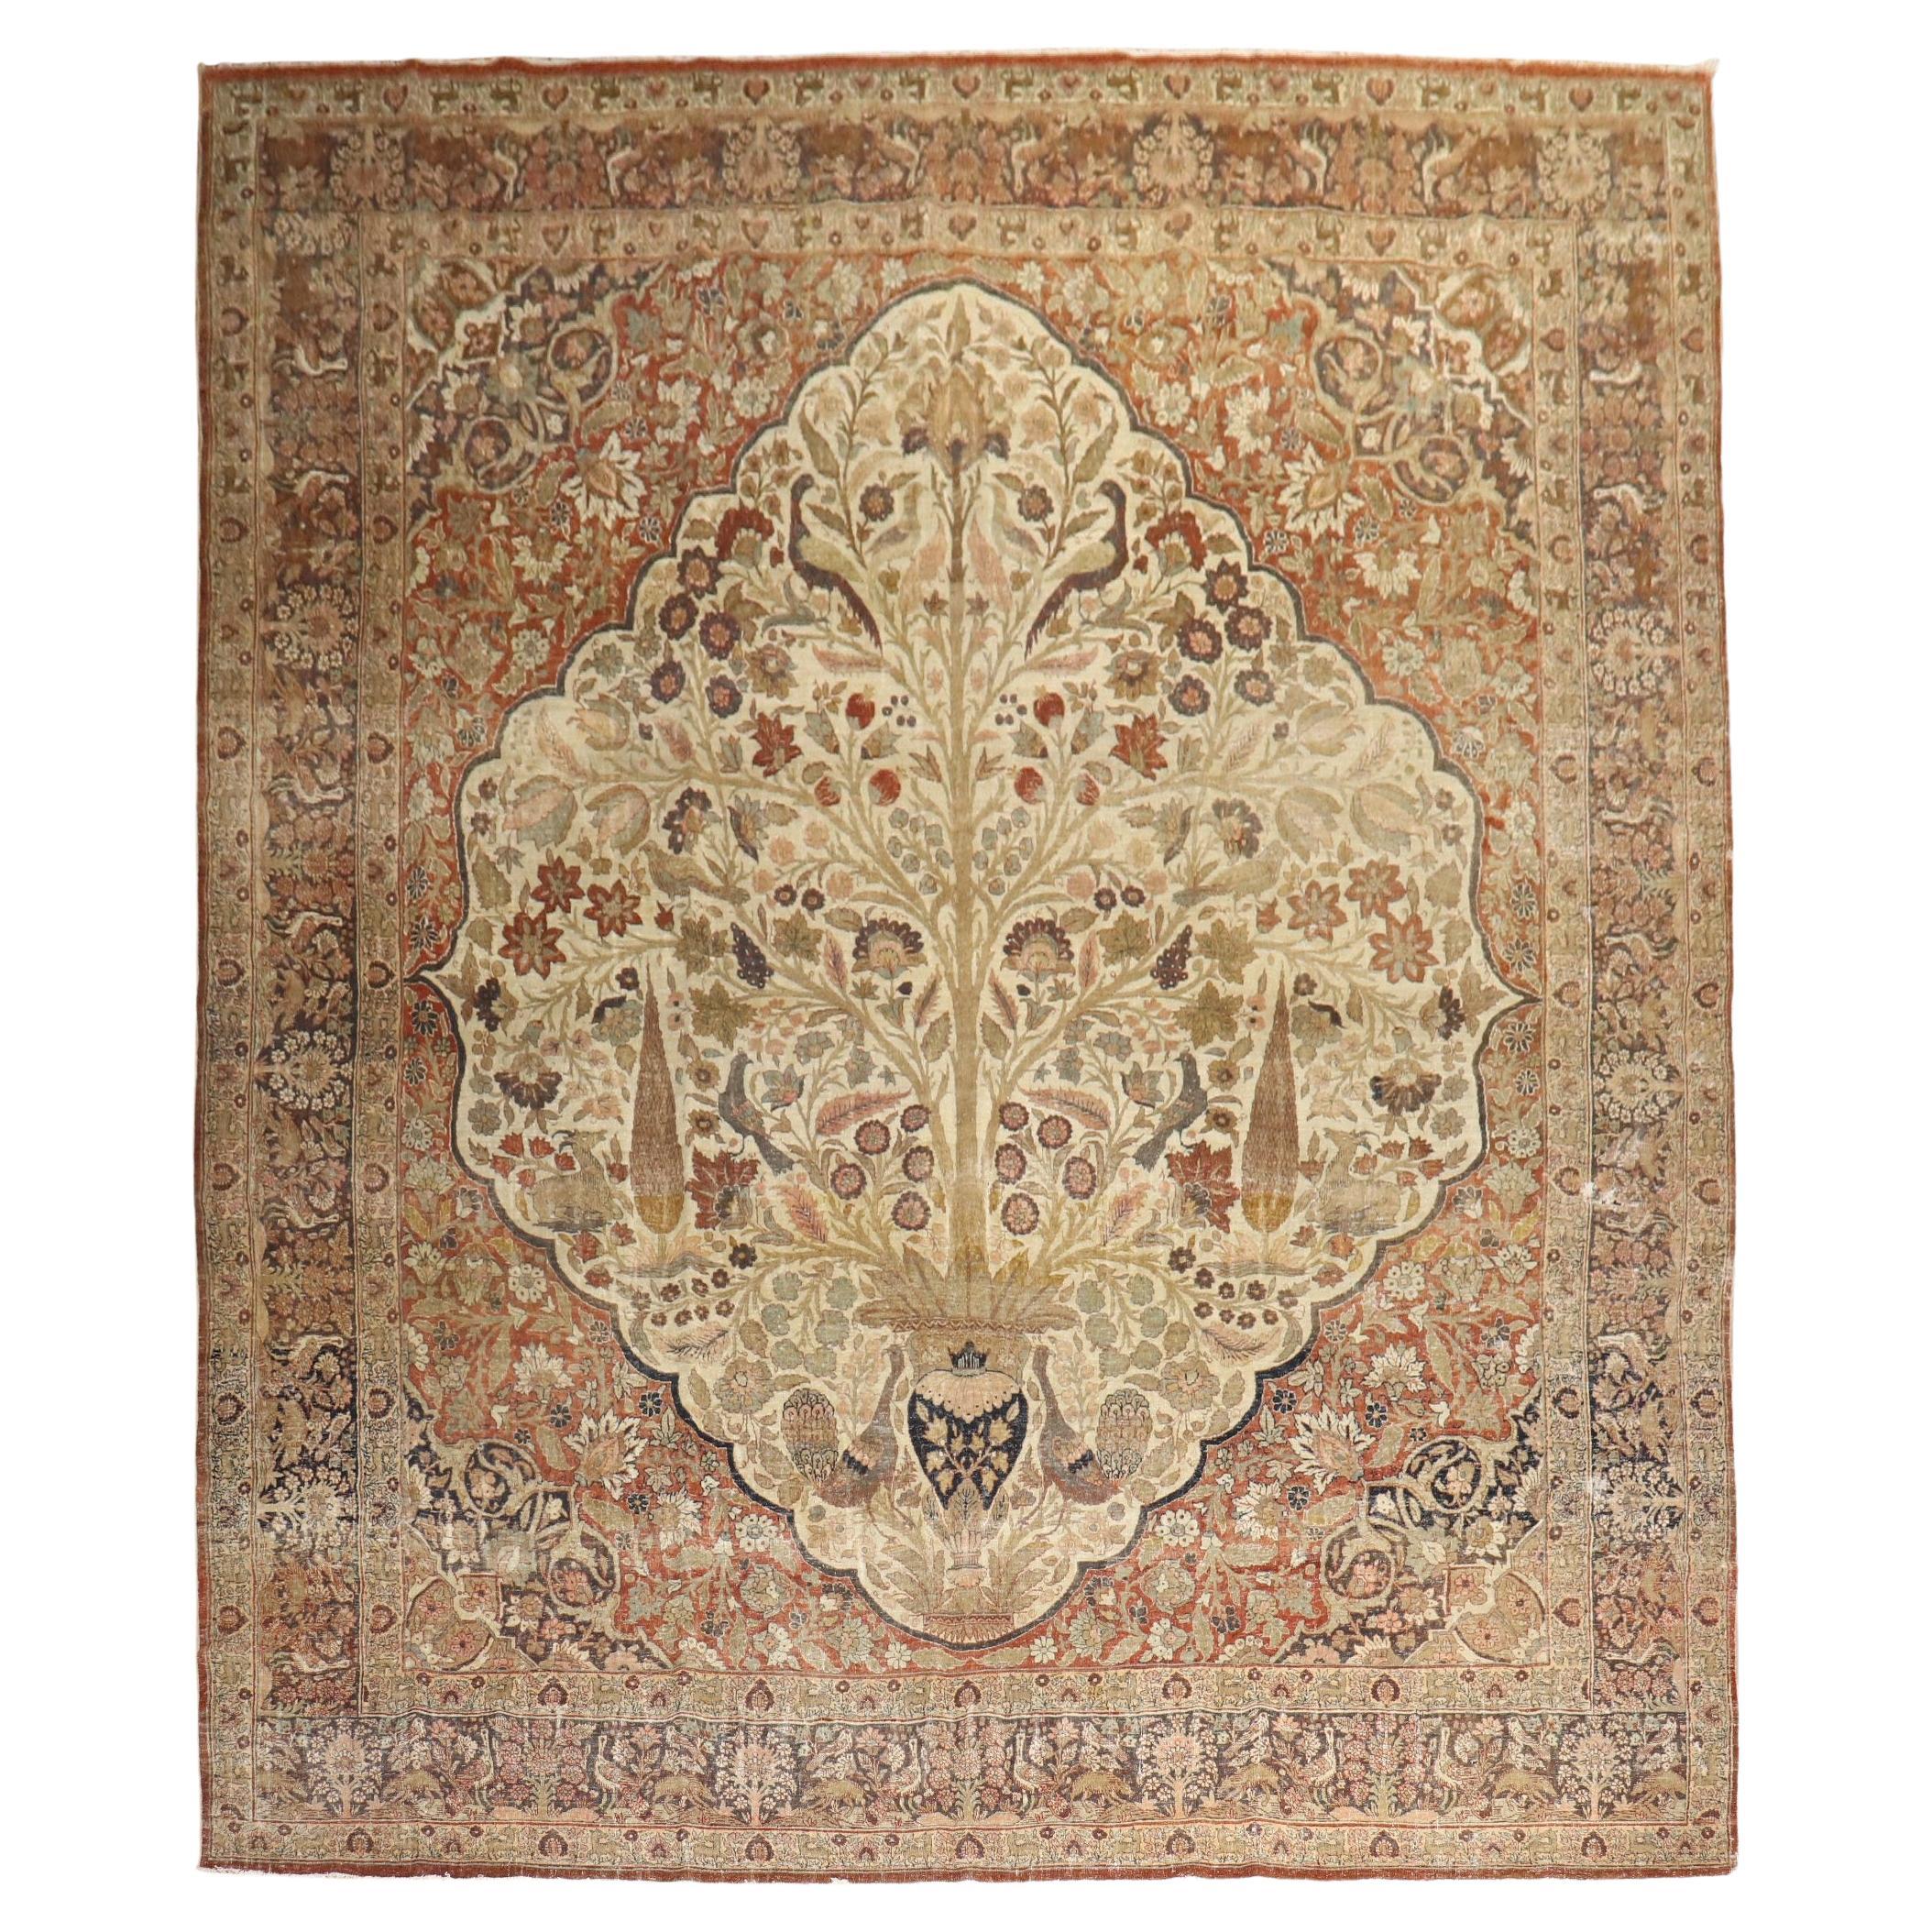 Zabihi Kollektion Antiker persischer Täbris-Teppich mit Hahn-Motiv aus der Zabihi-Kollektion